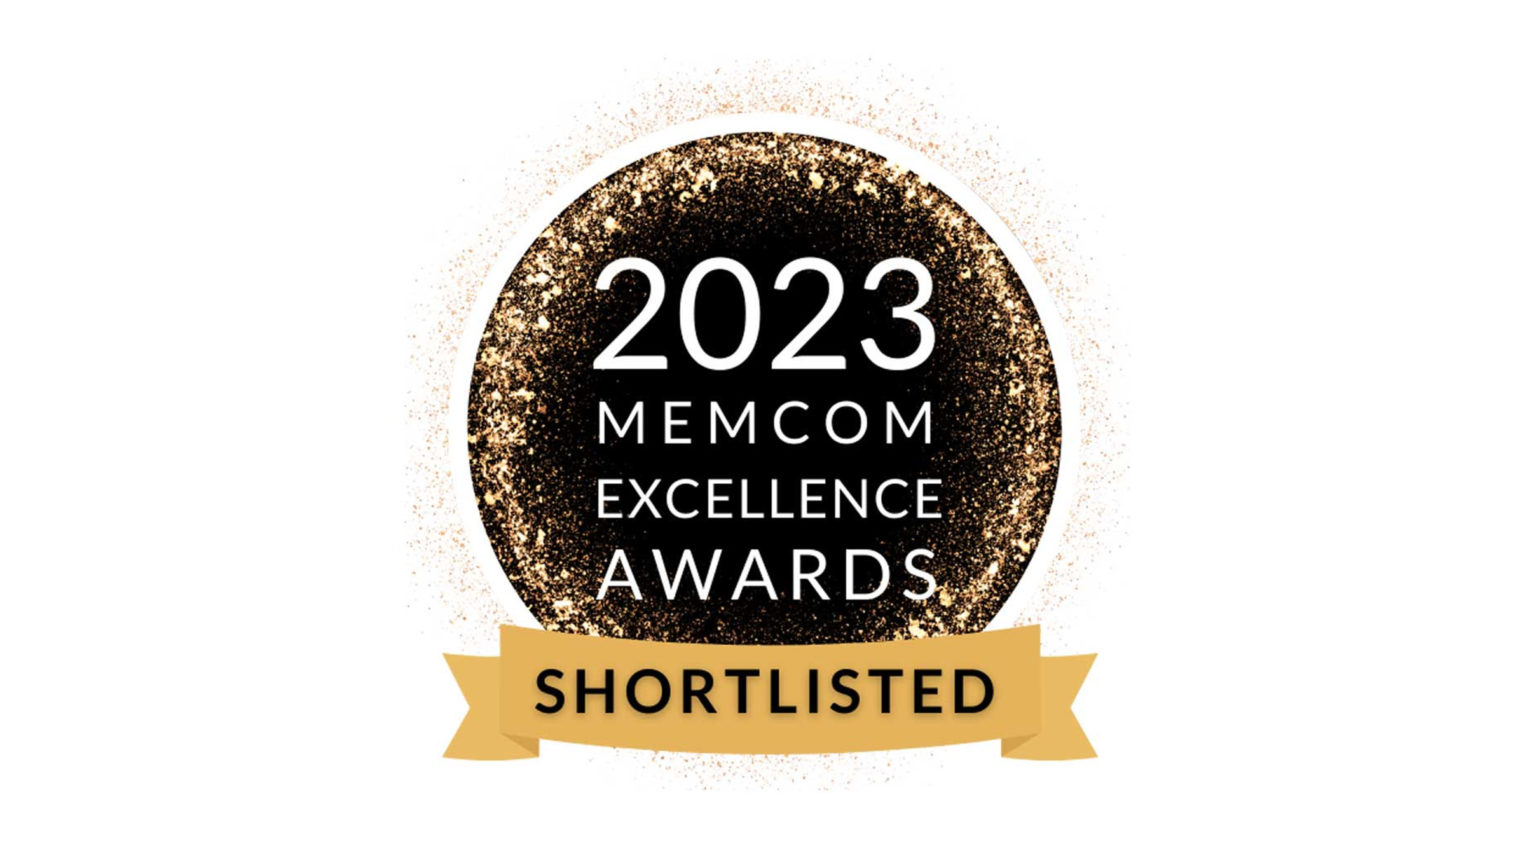 2023 Memcom Excellence Awards